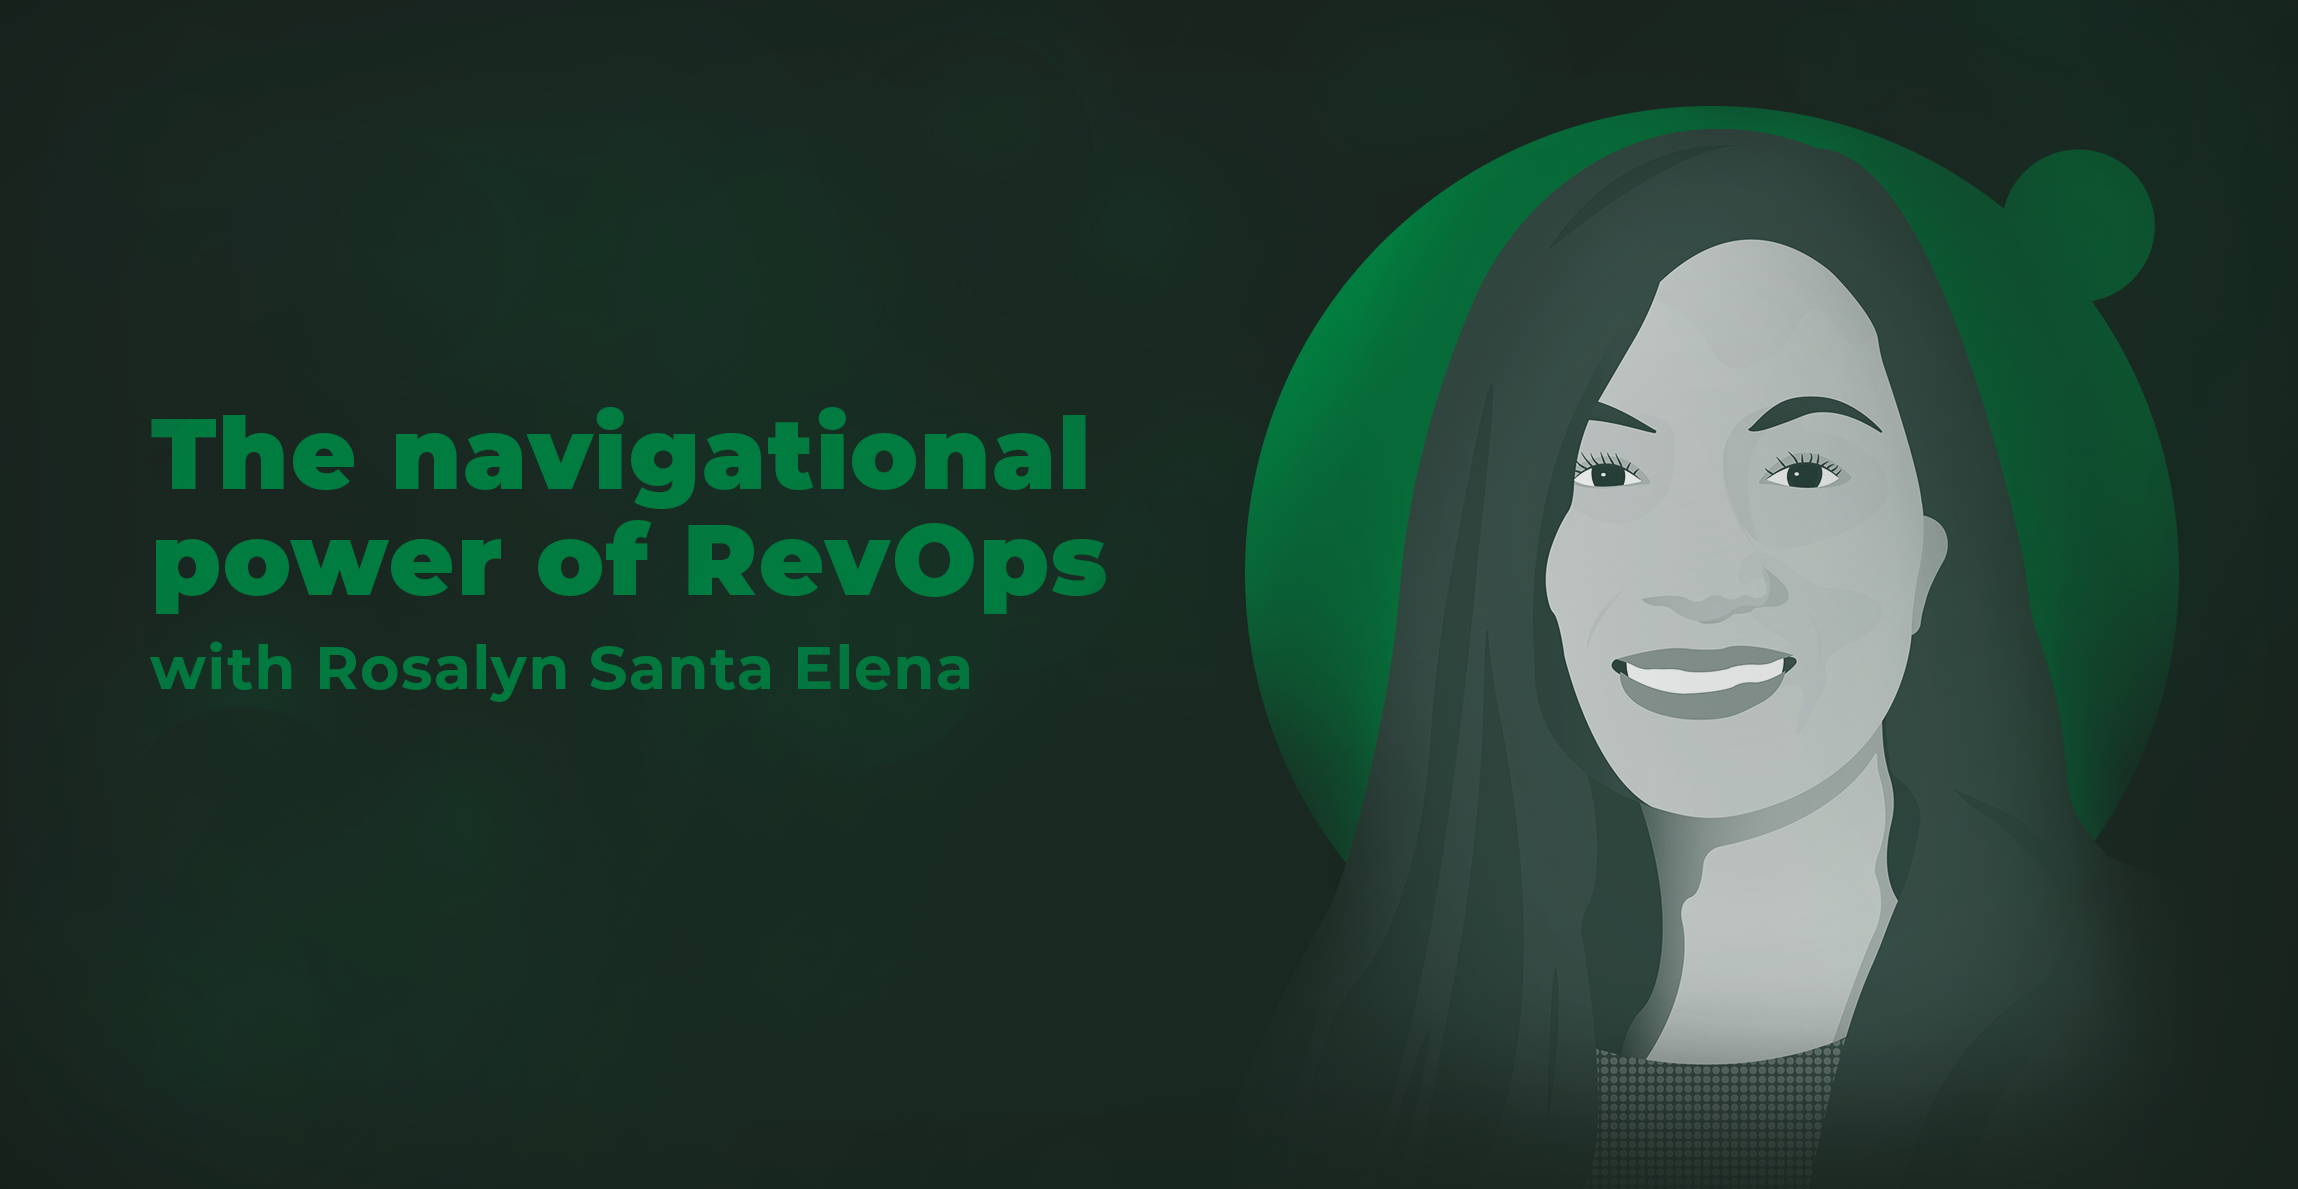 The navigational power of RevOps, with Rosalyn Santa Elena